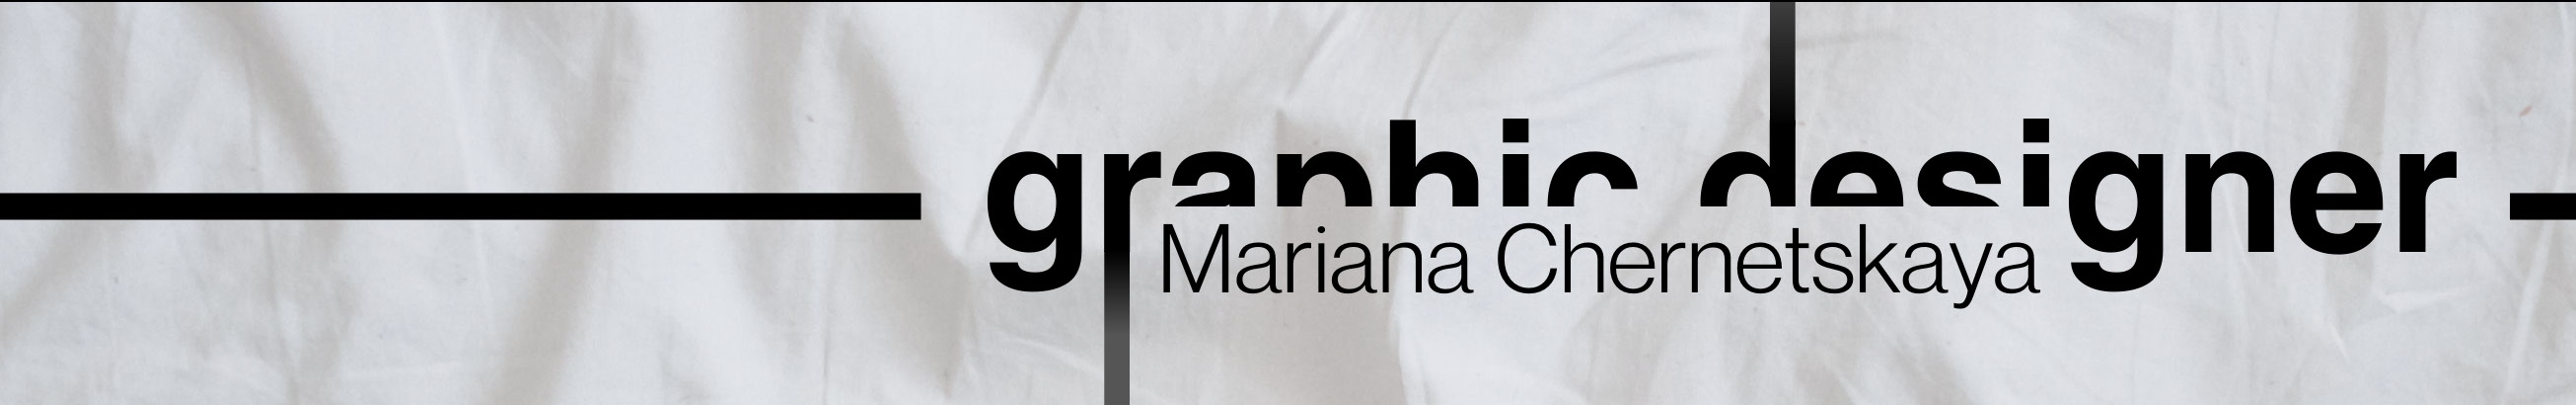 Mariana Chernetskaya's profile banner